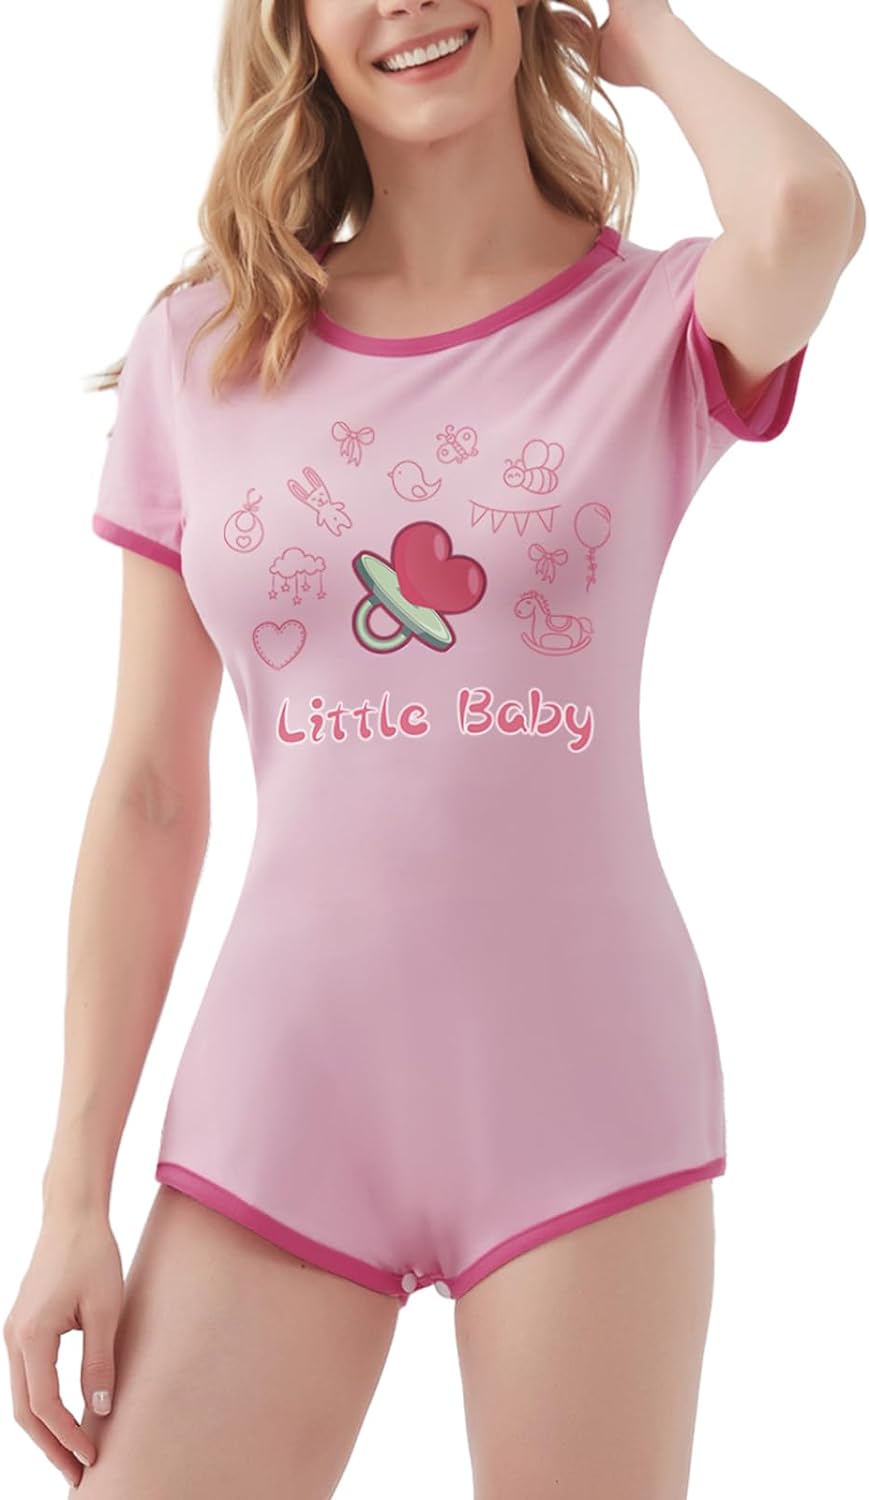 Women’s Short Sleeve Romper Pajamas Bodysuit Little Baby Onesie Jumpsuit Nightwear Sleepwear